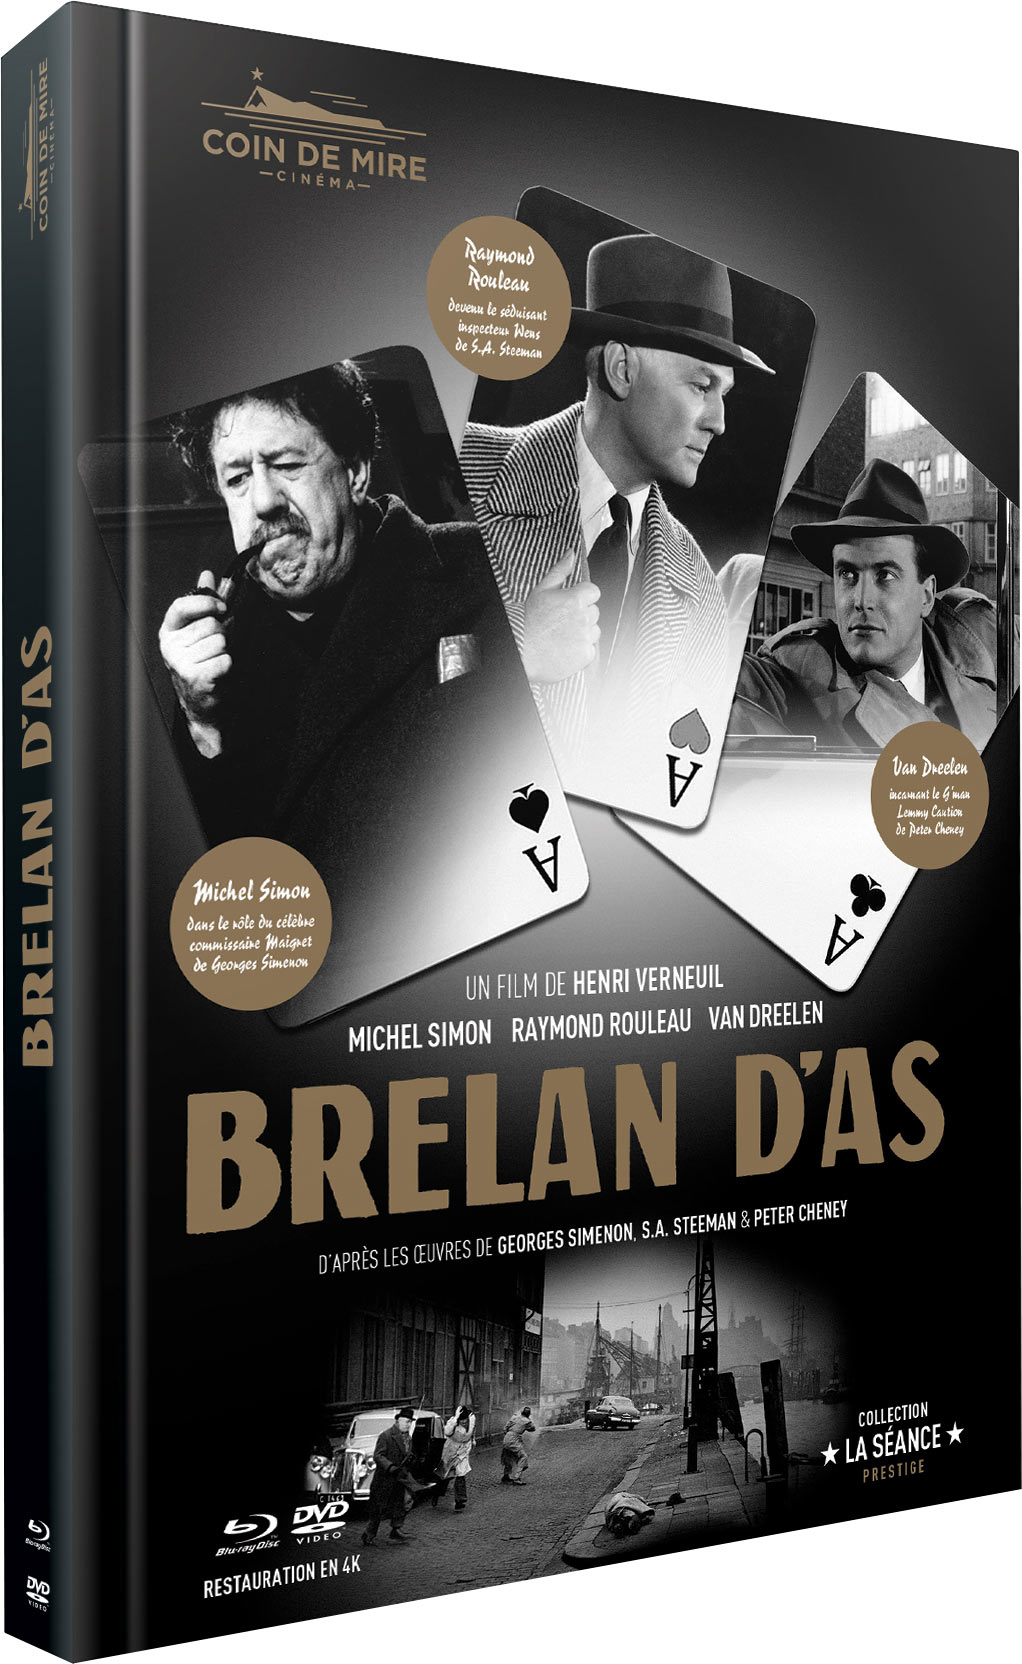 Brelan d'as - La Séance Prestige - Blu-ray + DVD + Goodies